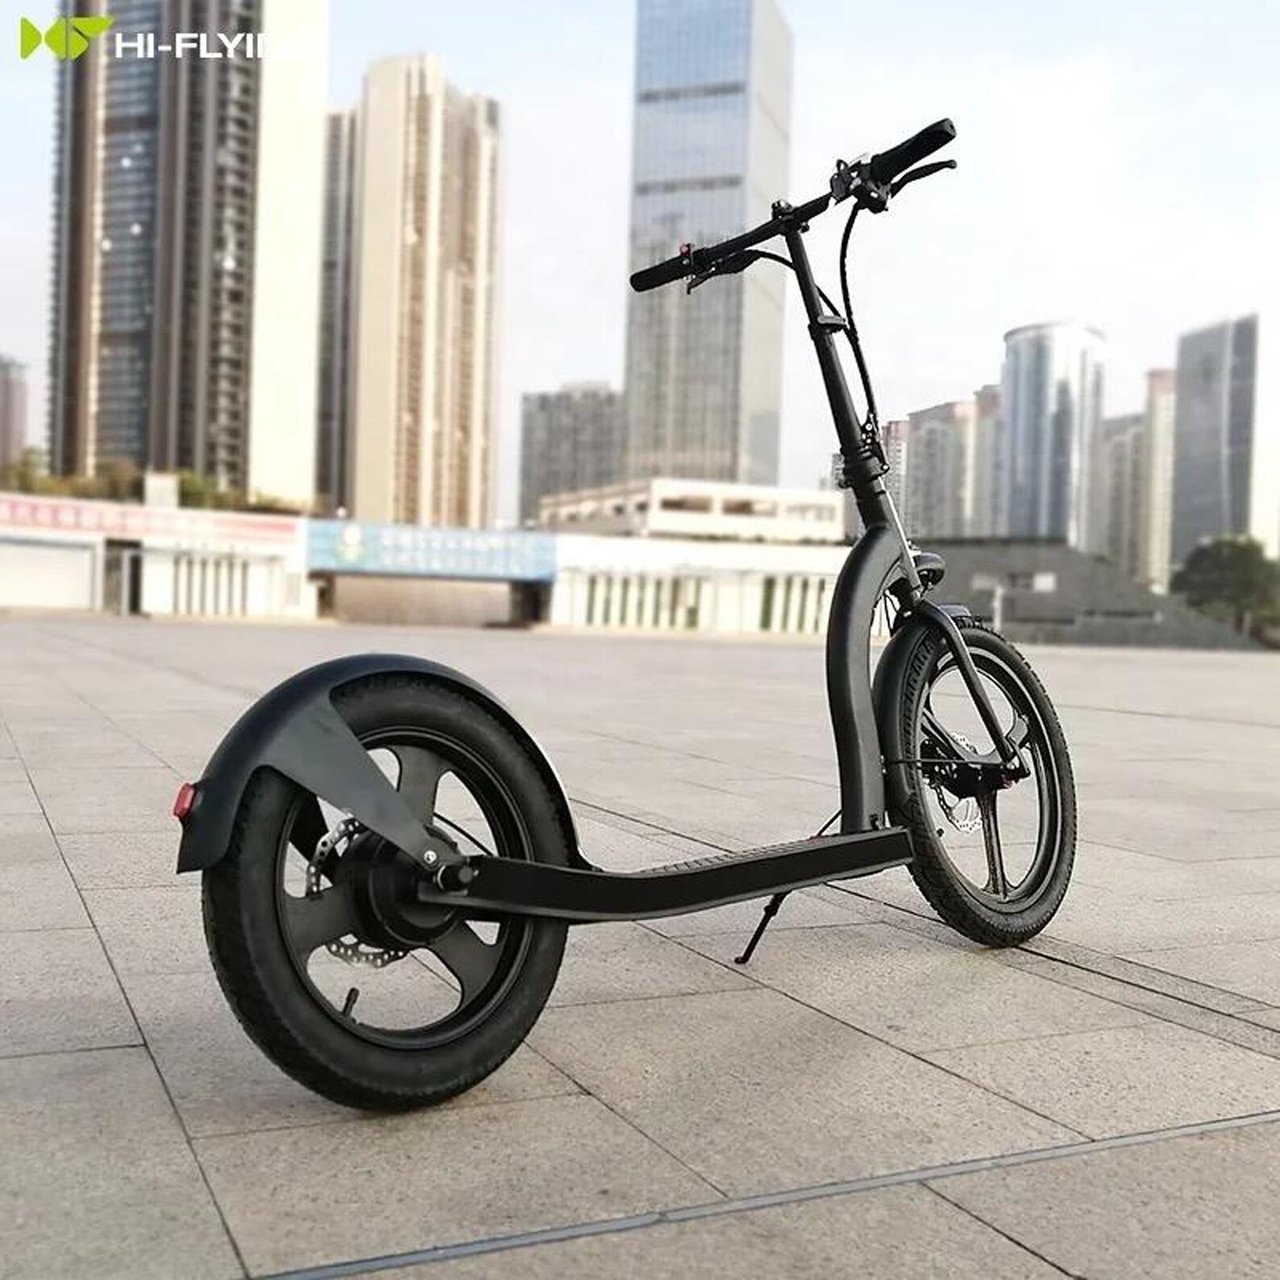 2022-atlc-urban-e-scooter-black-fully-assembled-willie-s-bike